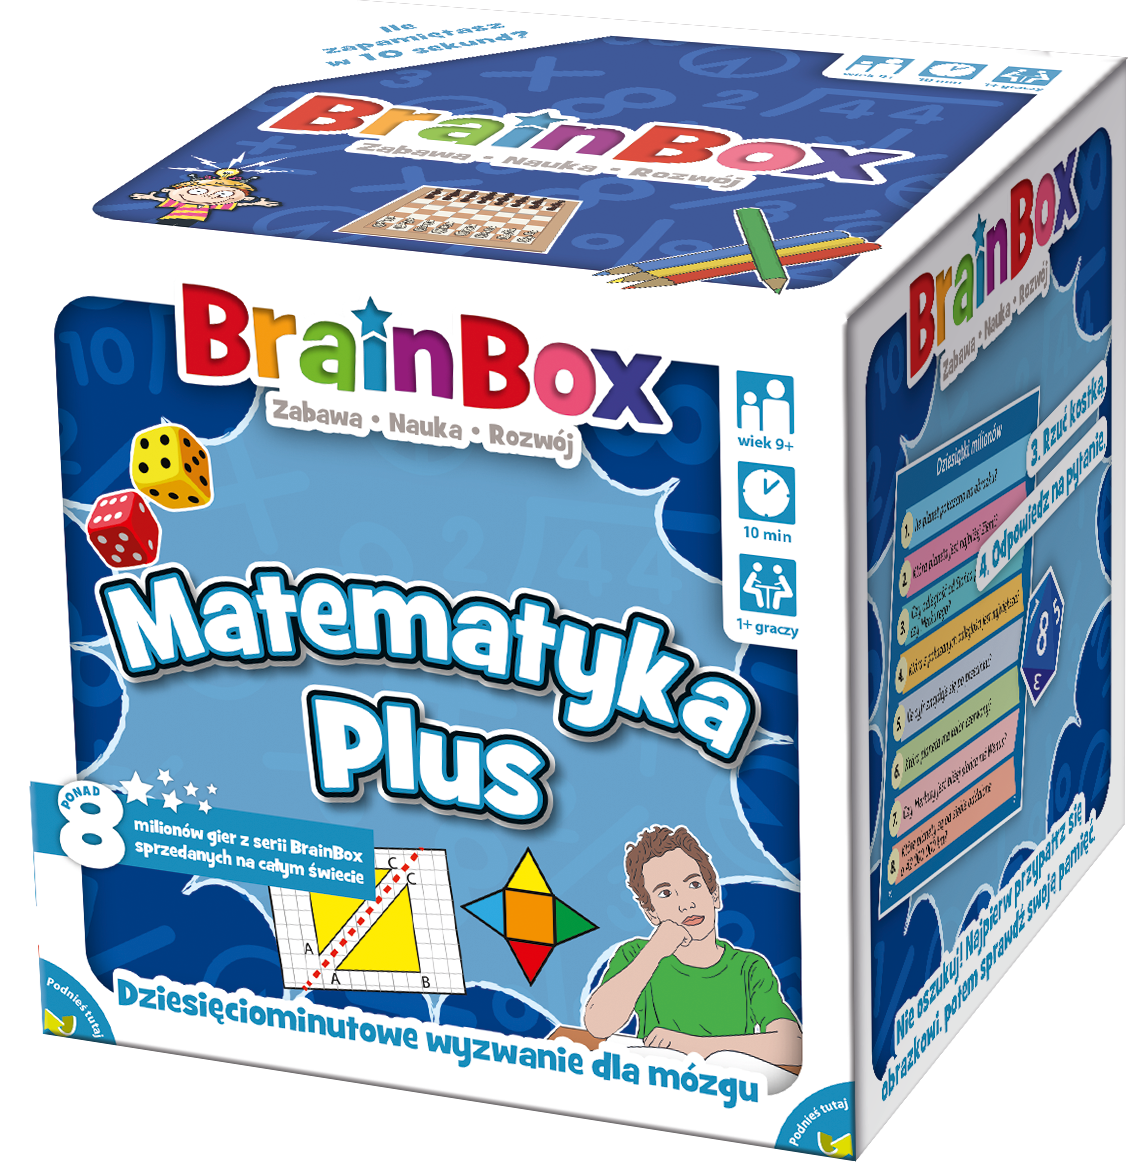 BrainBox - Matematyka Plus (druga edycja)